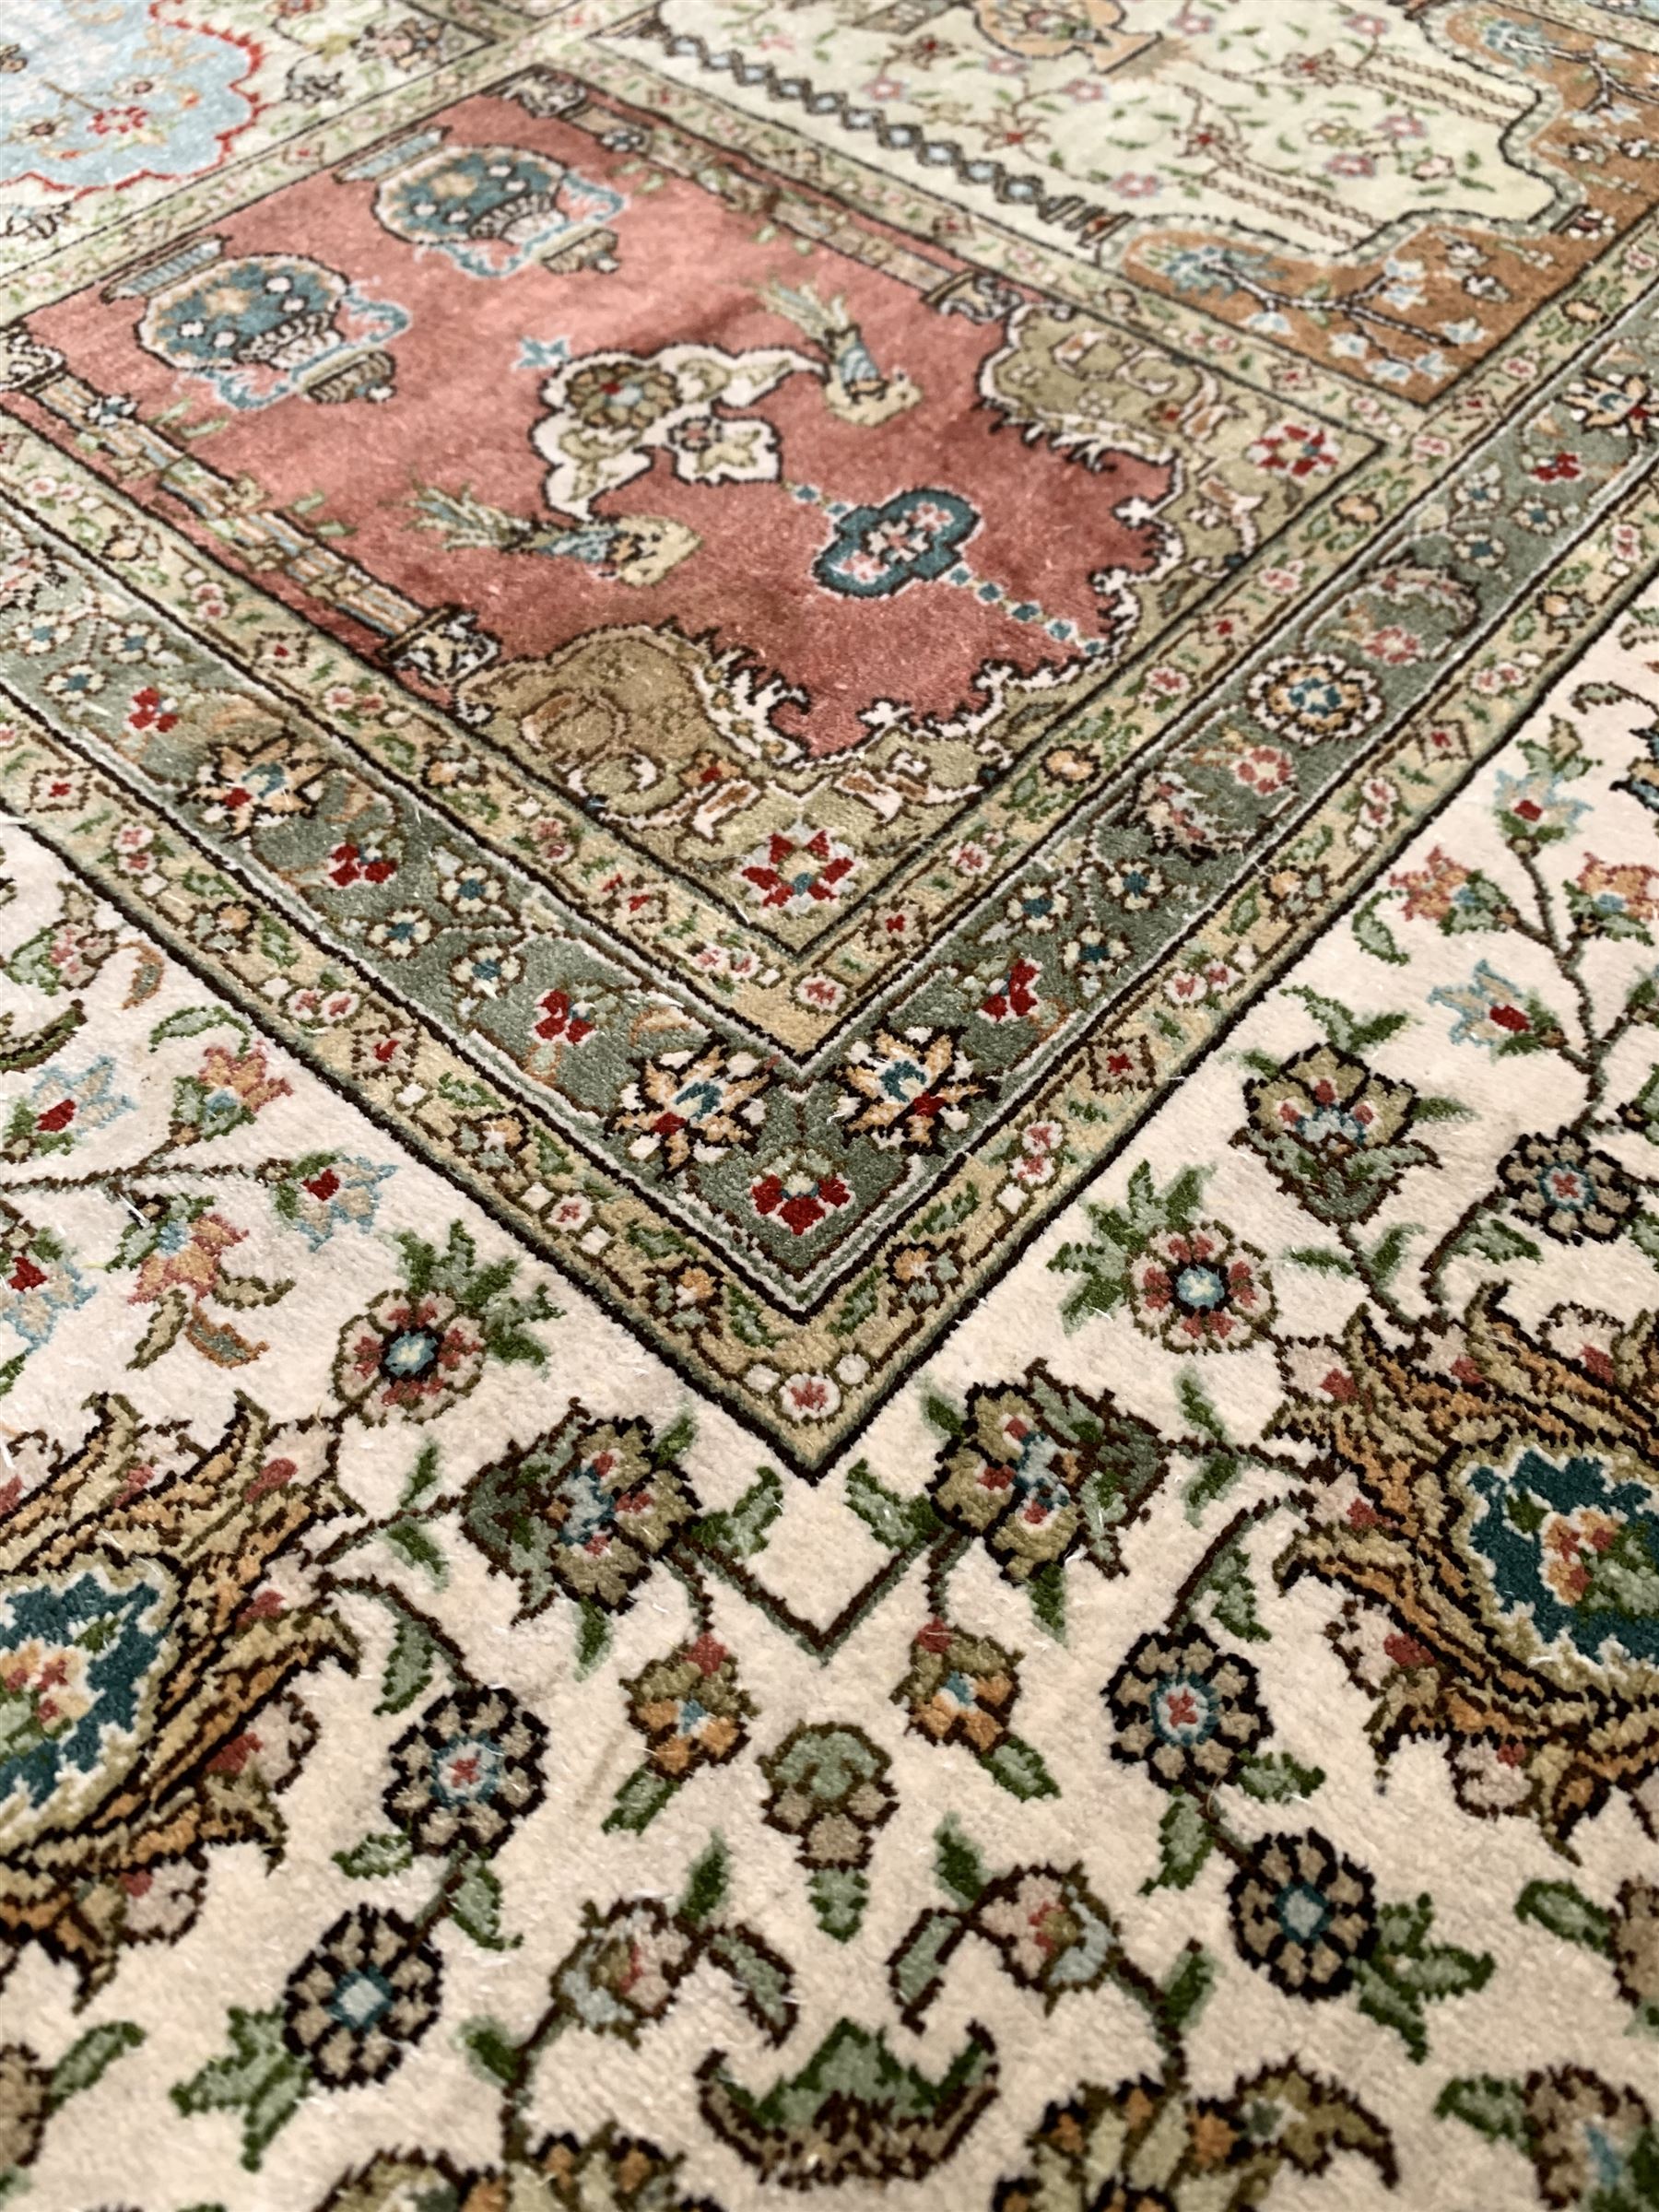 Persian Lalezar design silk prayer ground rug - Image 3 of 3